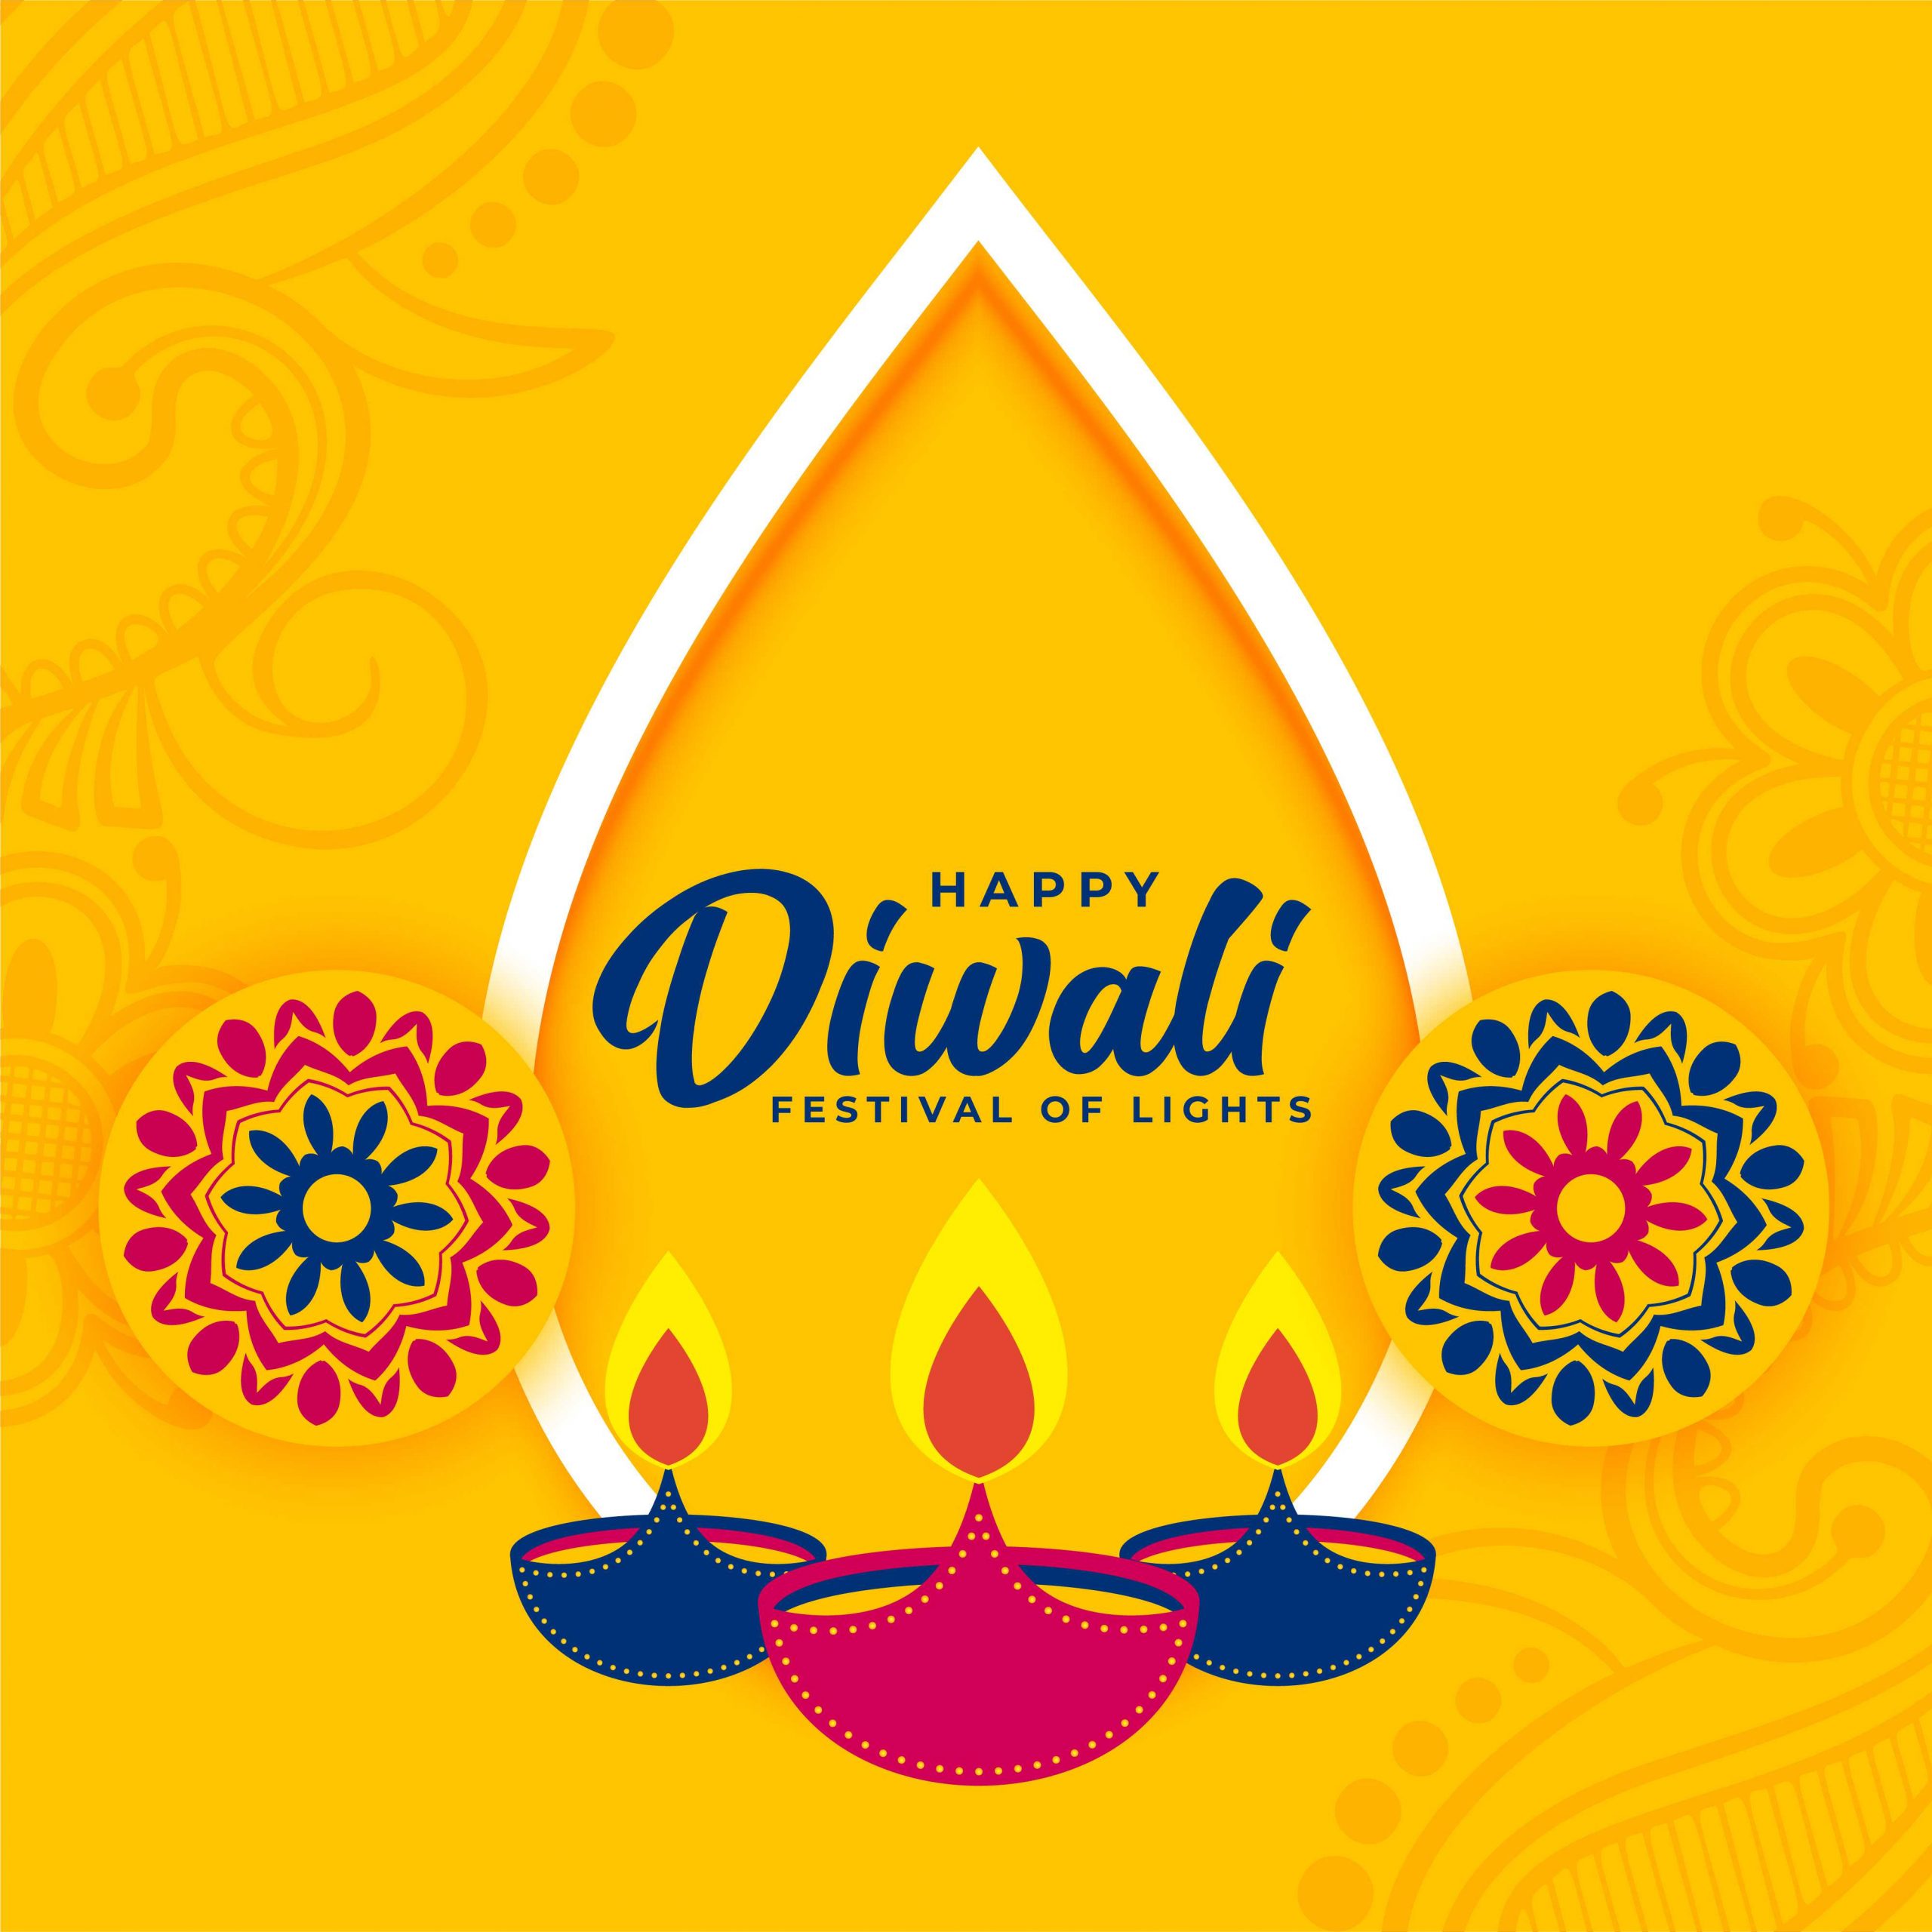 Happy Diwali photo download